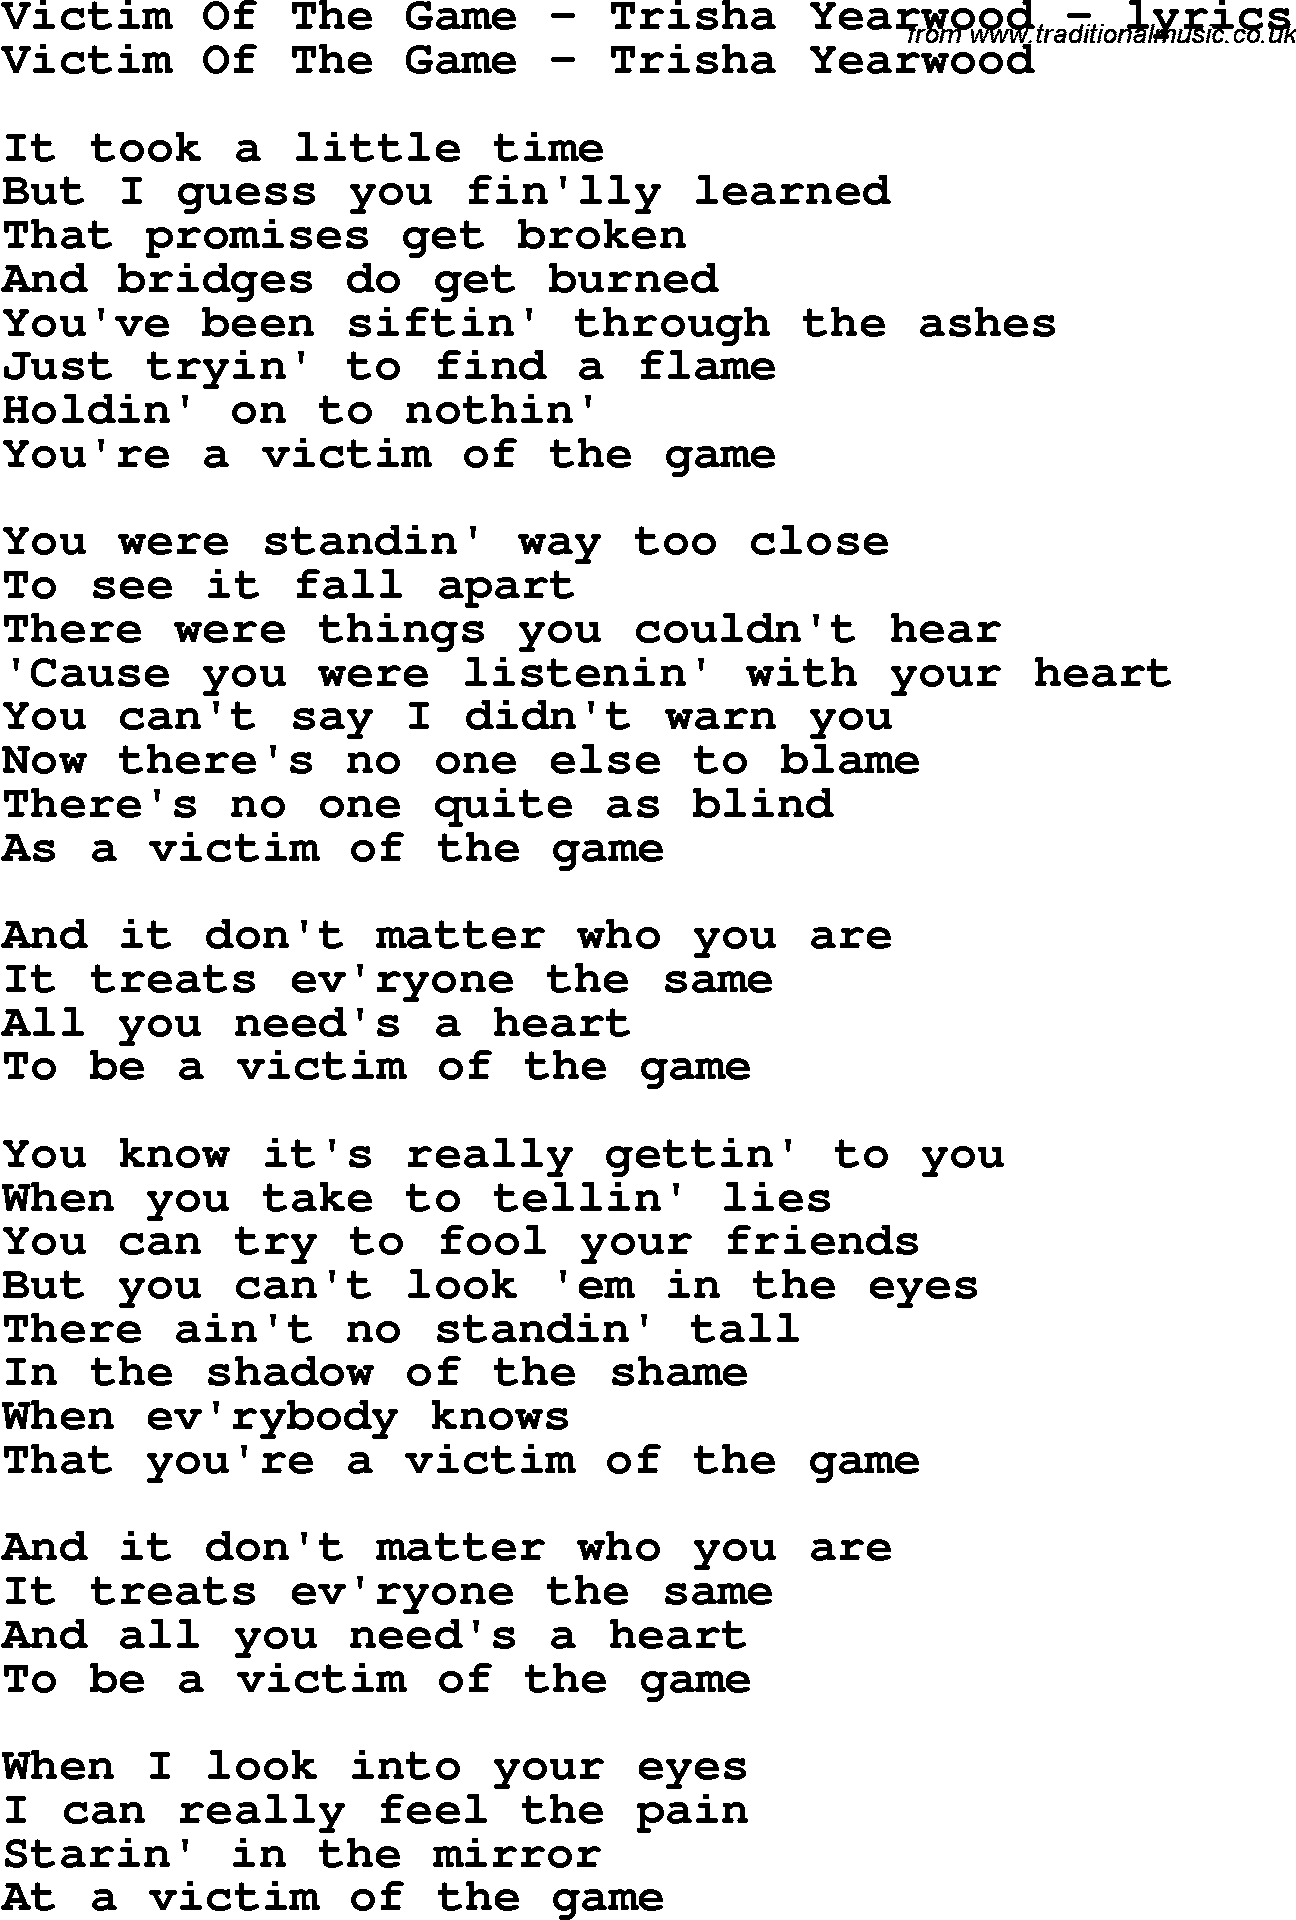 Love Song Lyrics for: Victim Of The Game - Trisha Yearwood